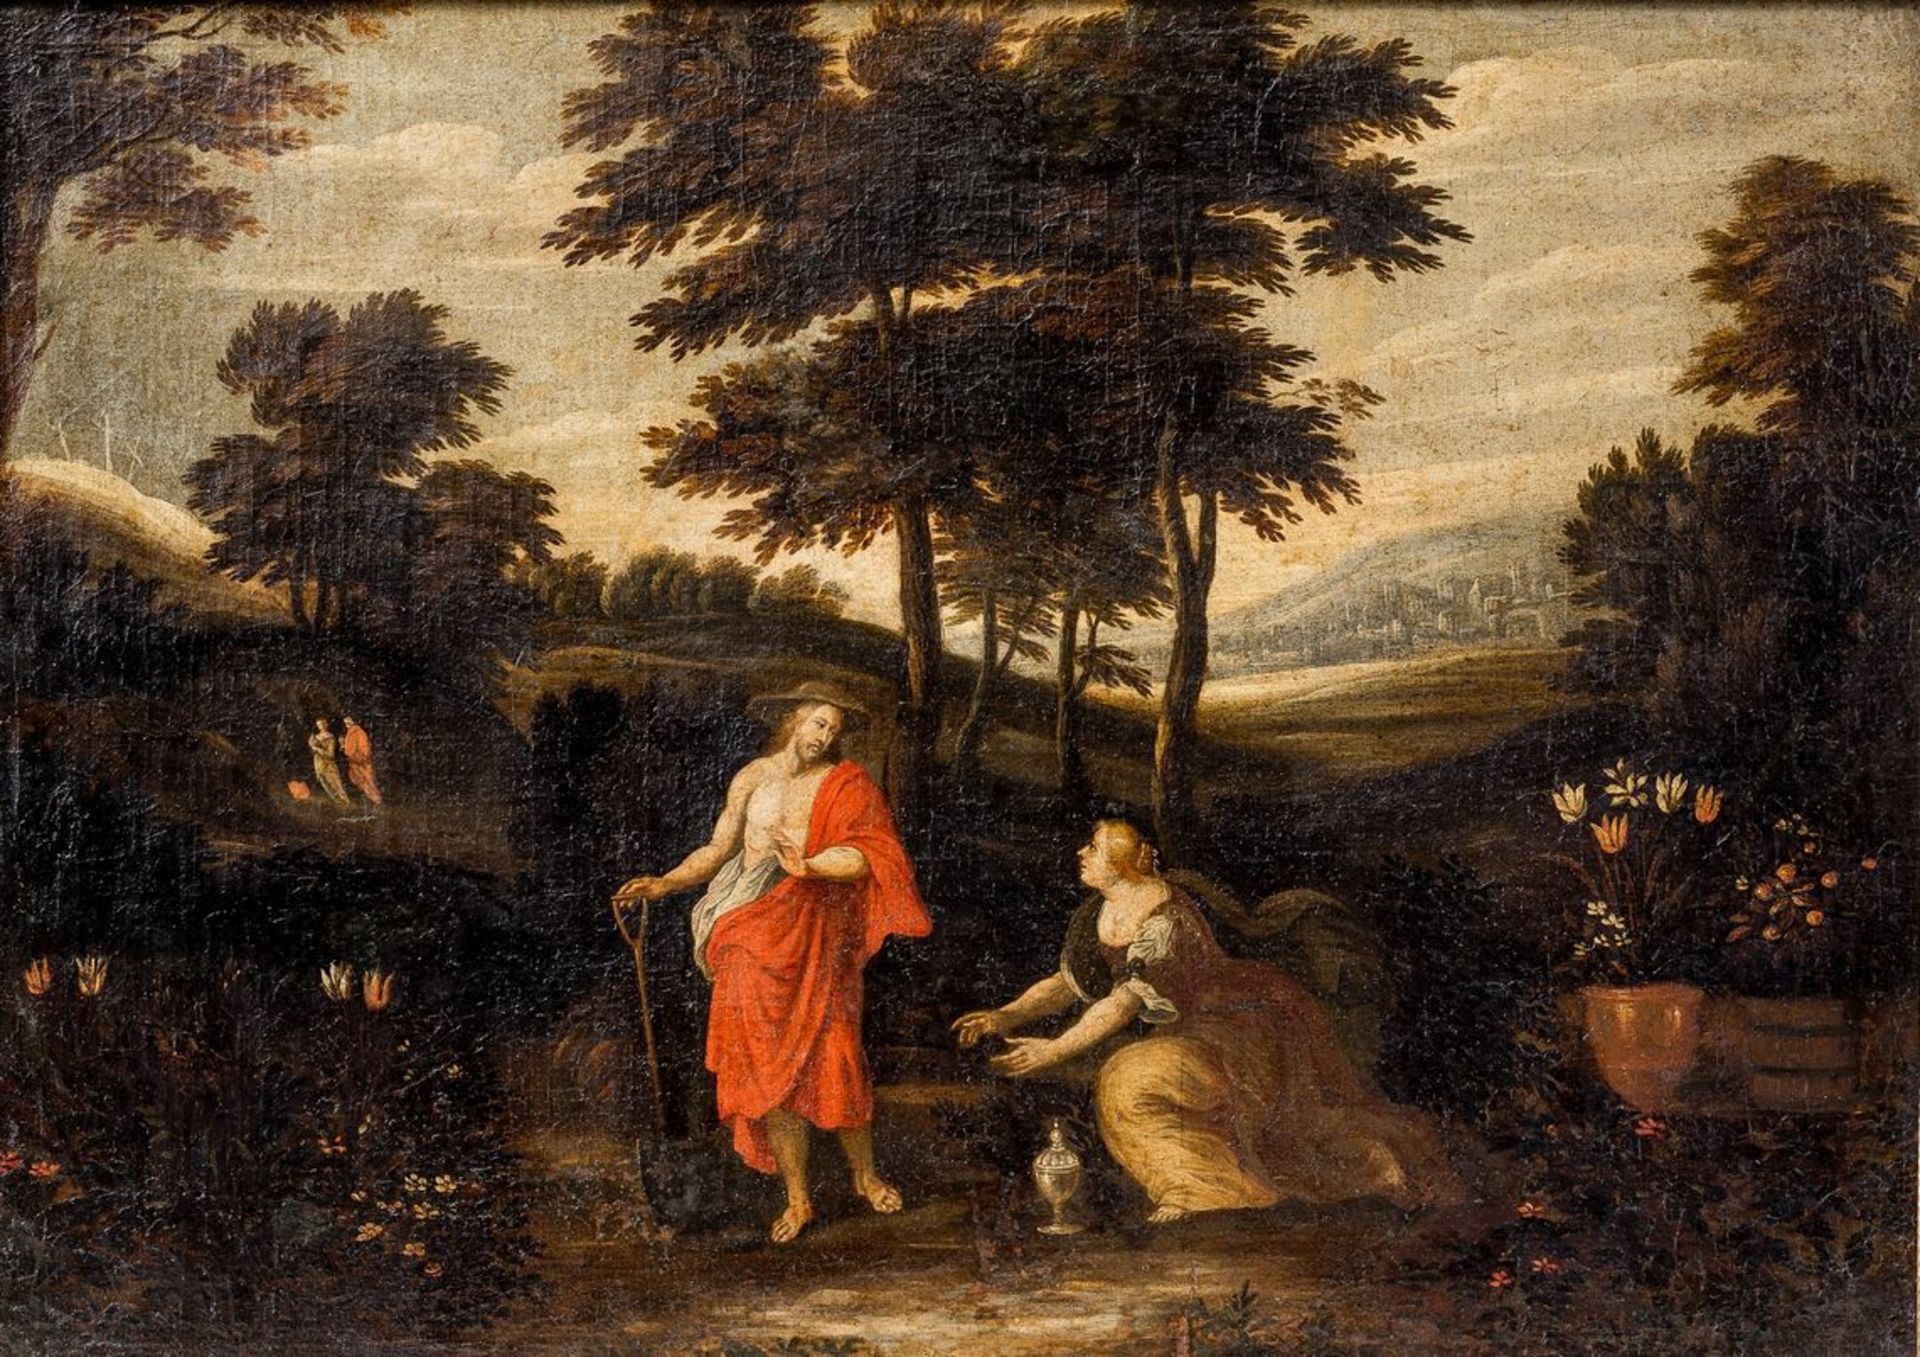 Brueghel, Jan der Jüngere